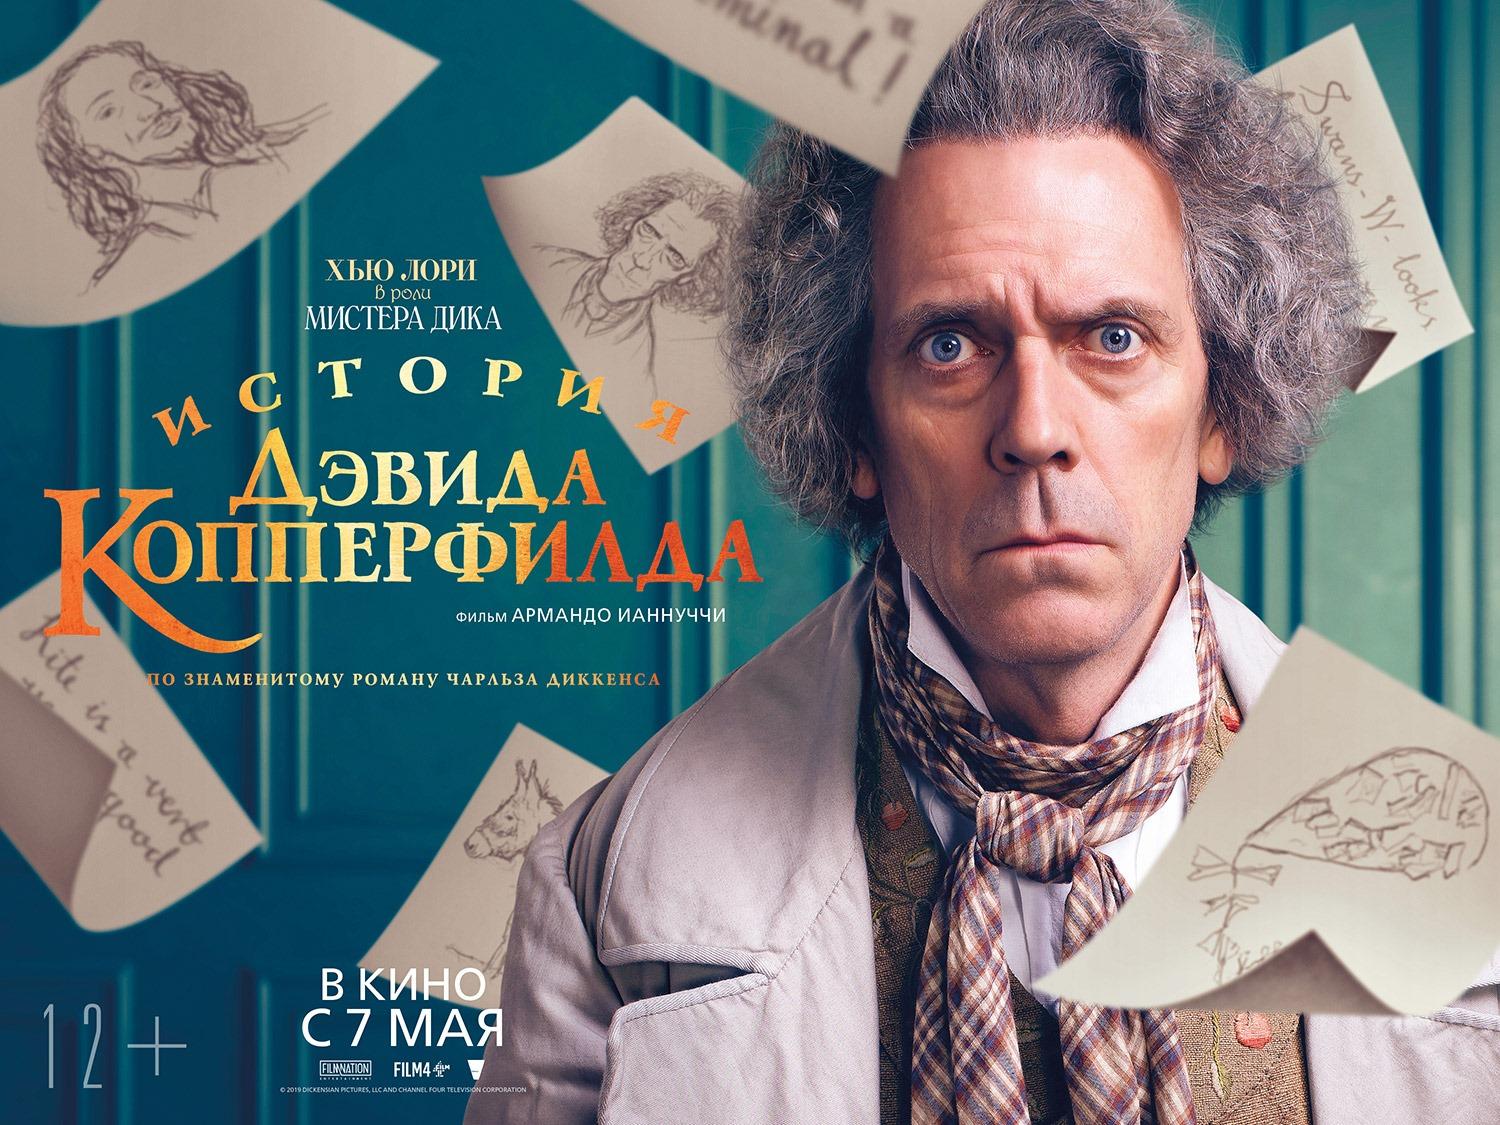 Постер фильма История Дэвида Копперфилда | The Personal History of David Copperfield